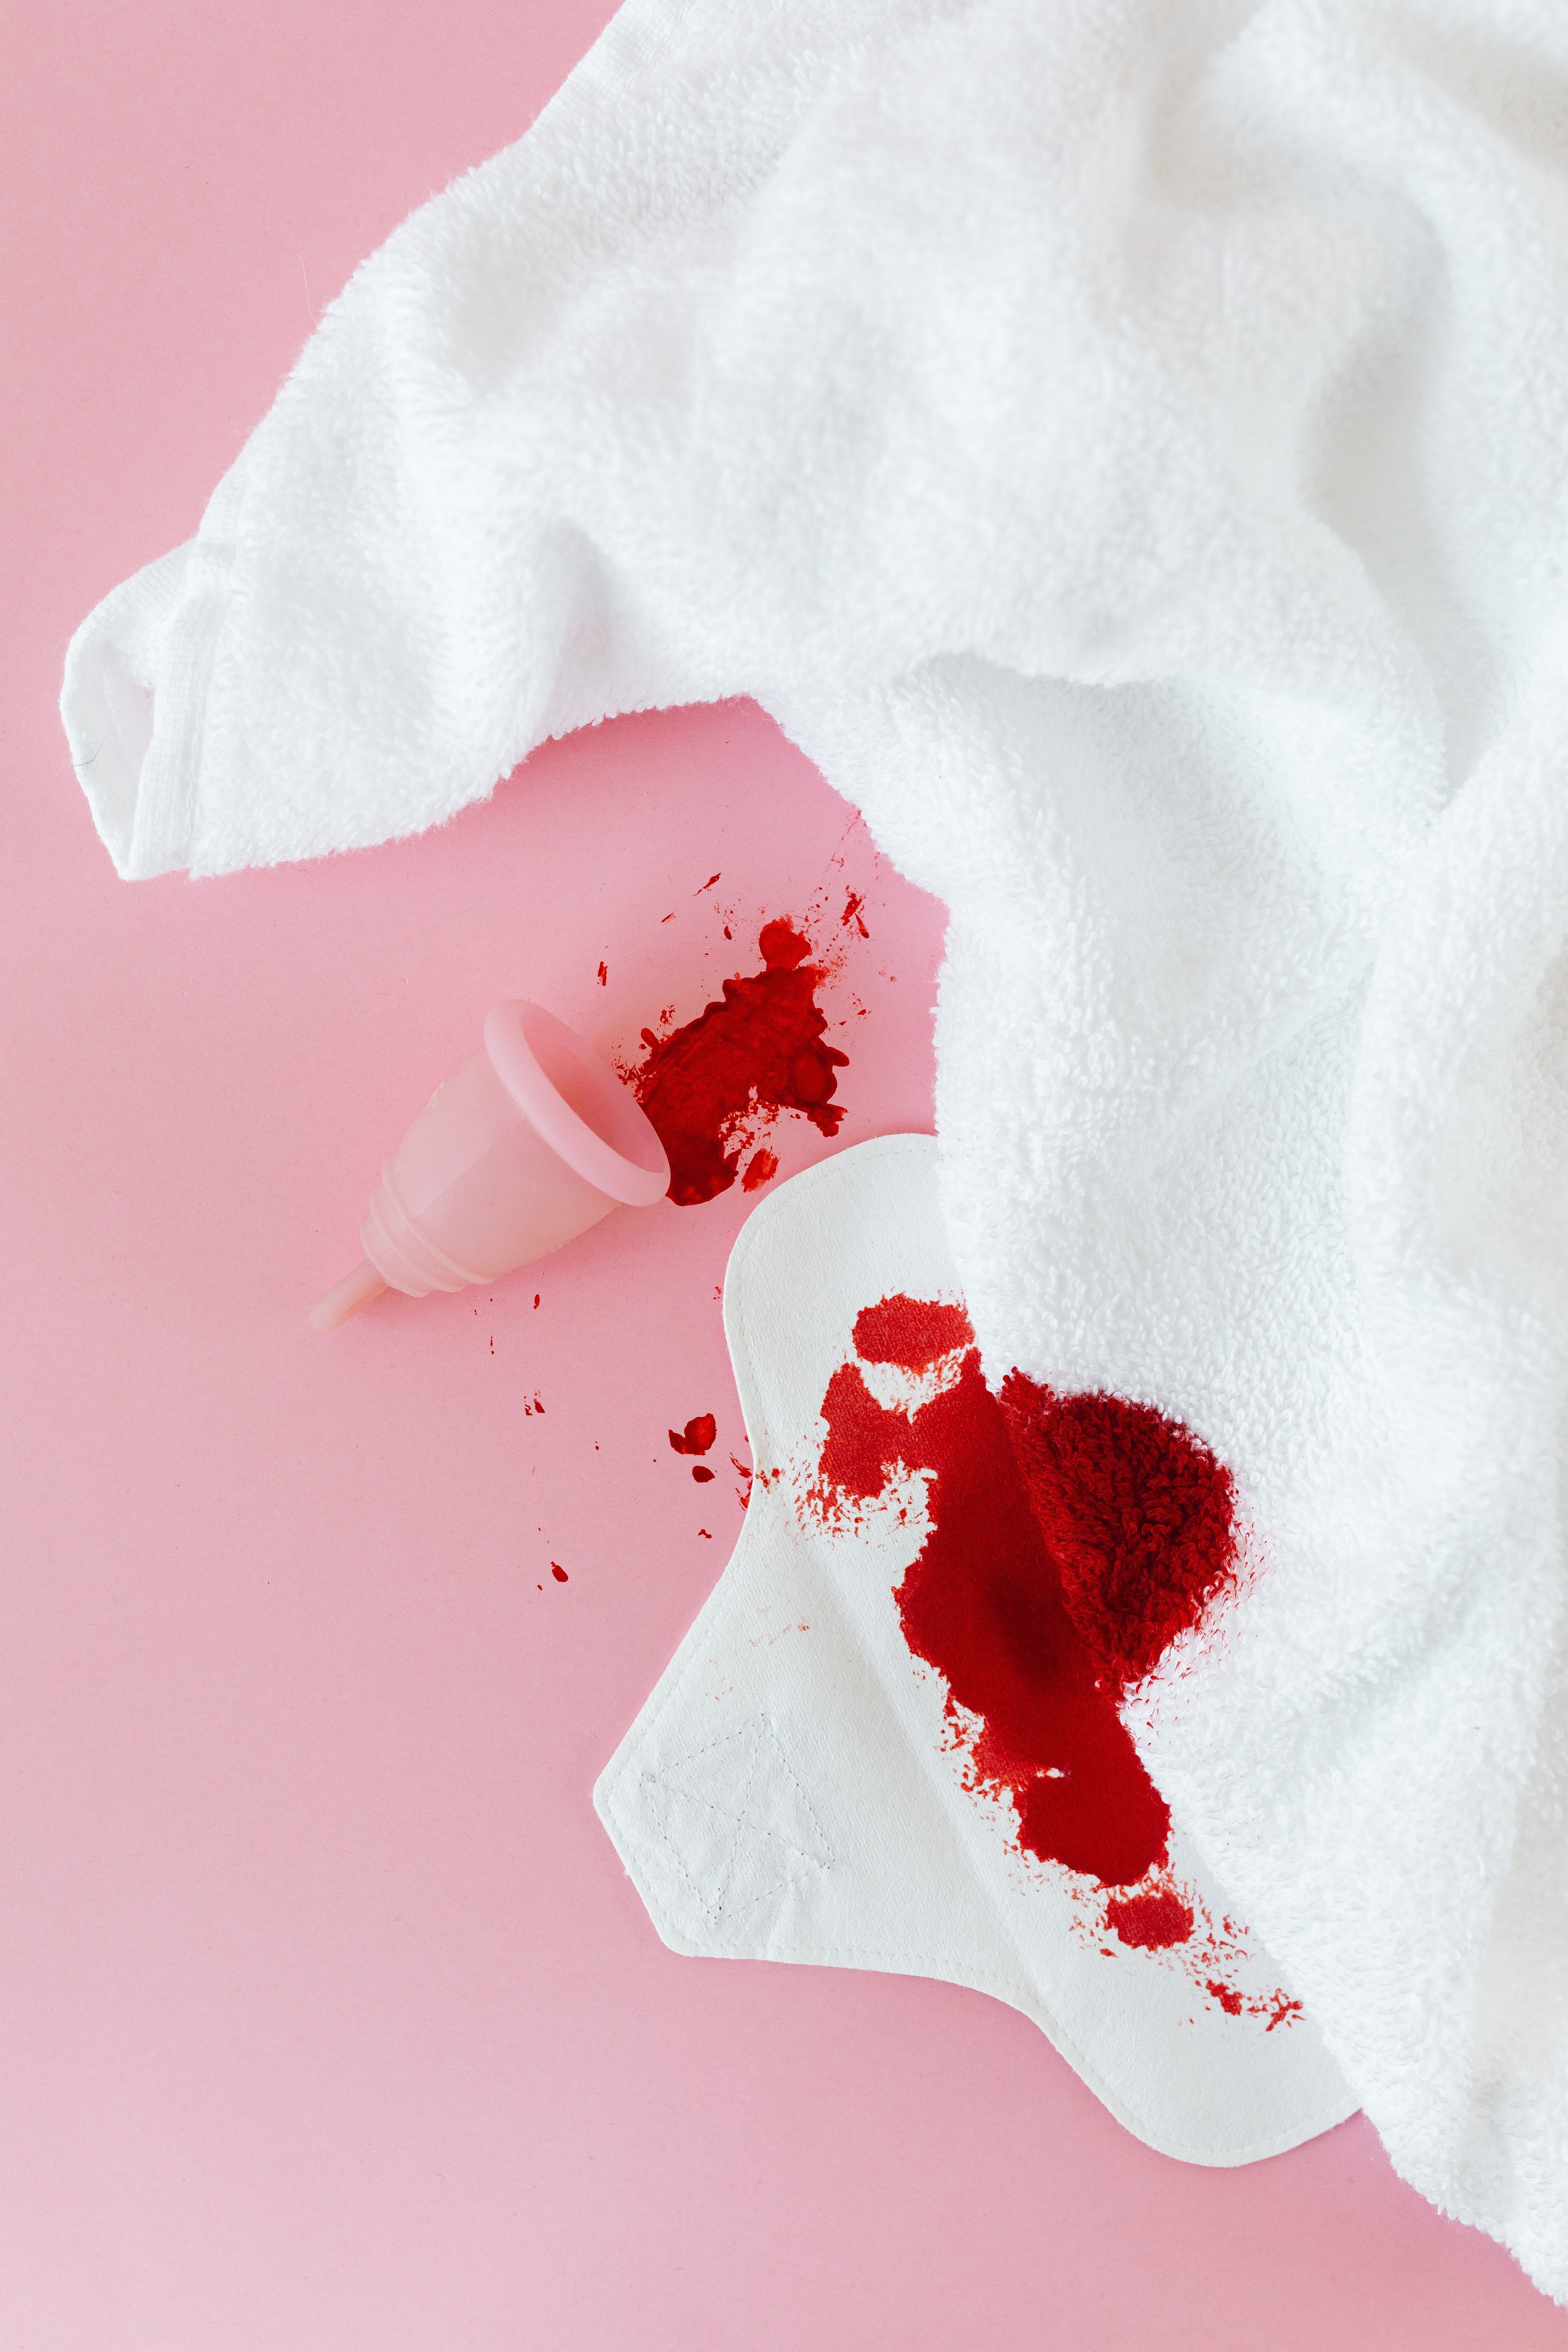 Blood on a Sanitary Napkin · Free